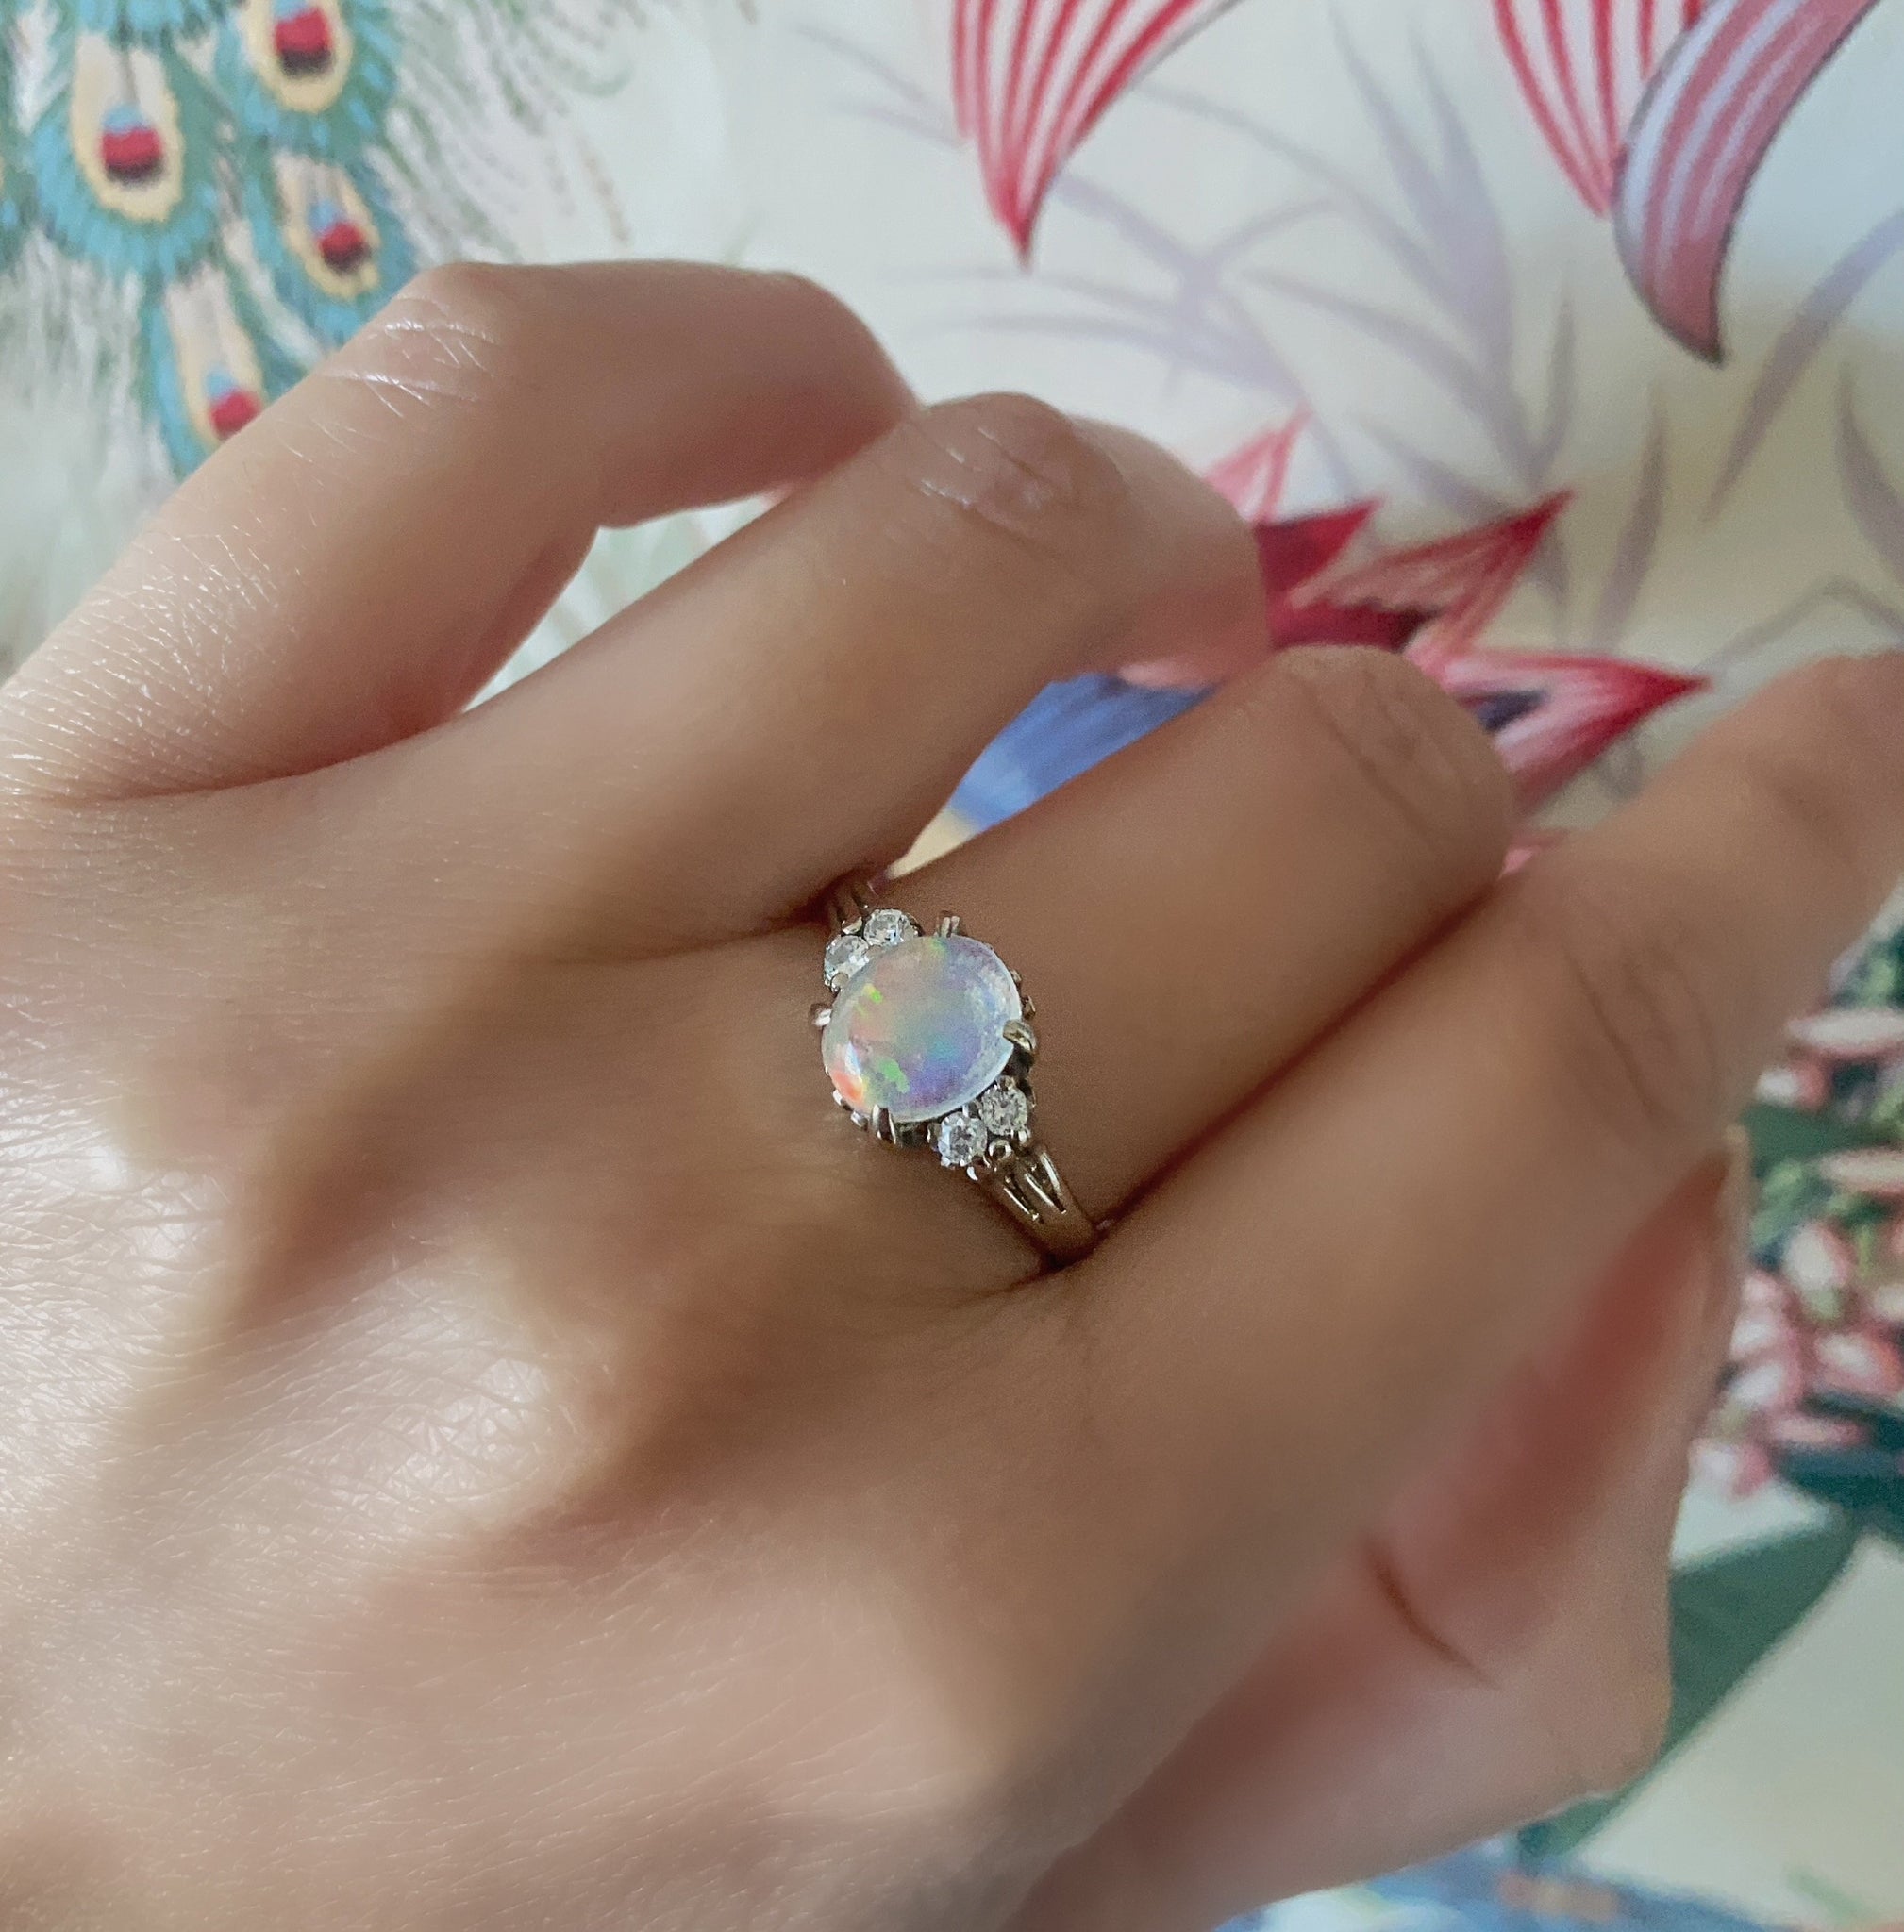 SIZE 7 CRYSTAL OPAL SET IN DOLPHIN SHAPE 9K GOLD RING CJ911 | Jewelry  wedding rings, Black opal ring, Custom wedding rings